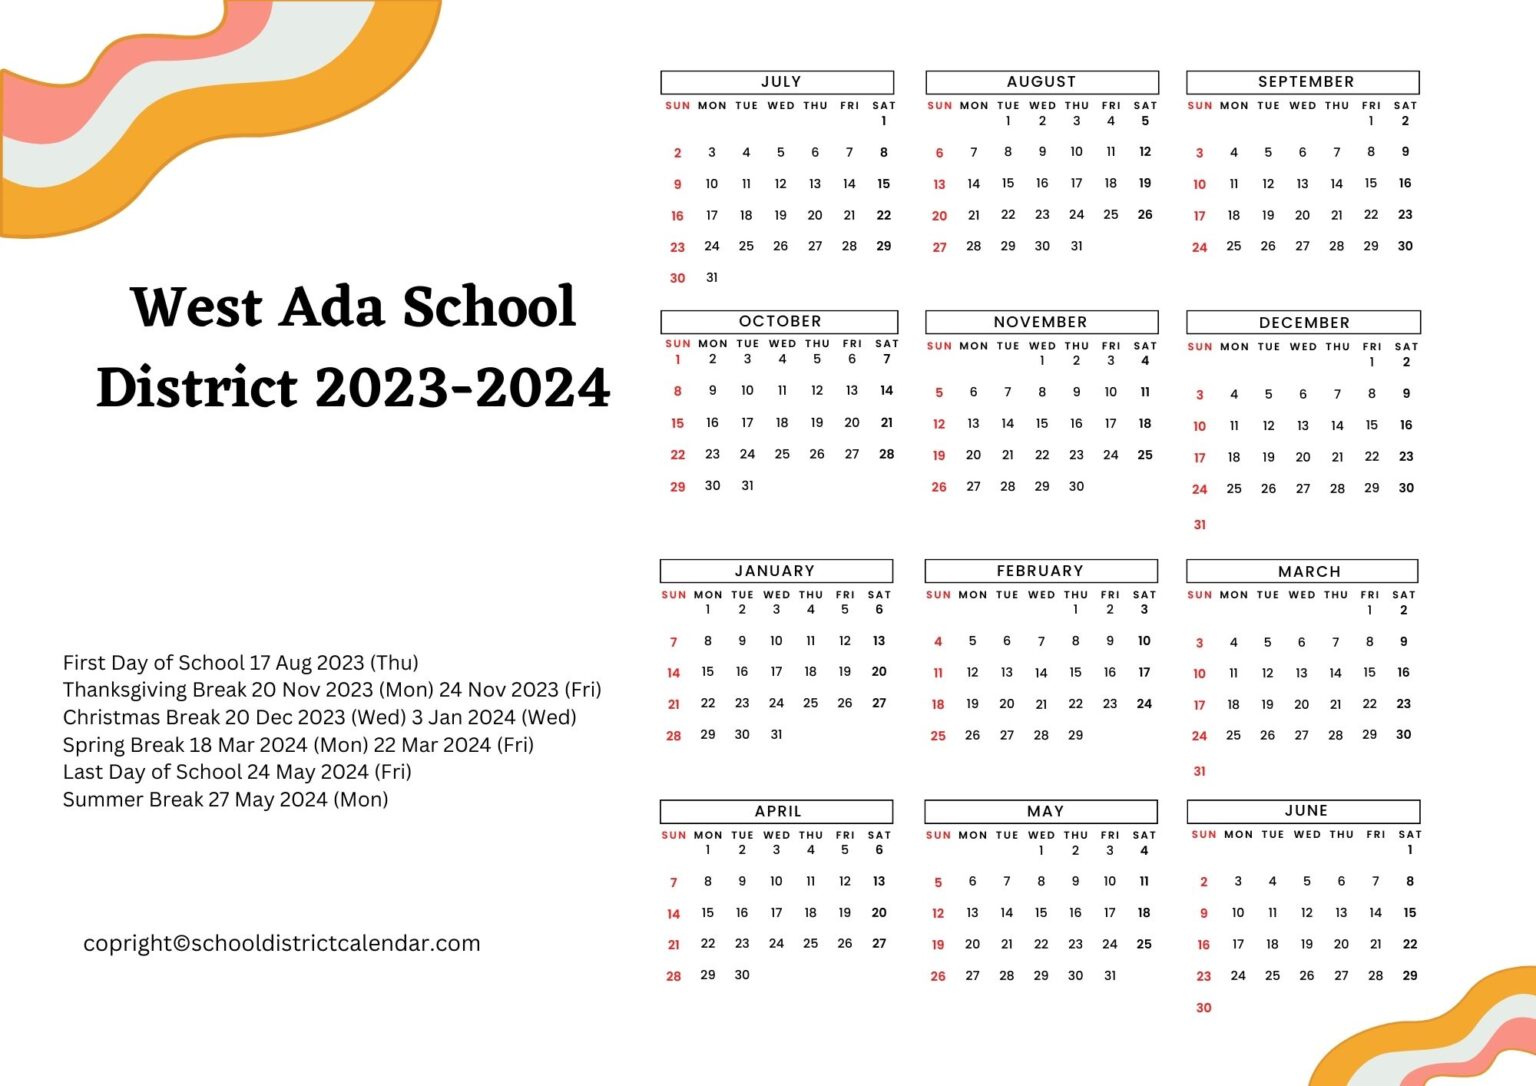 West Ada School District Calendar Holidays 20232024